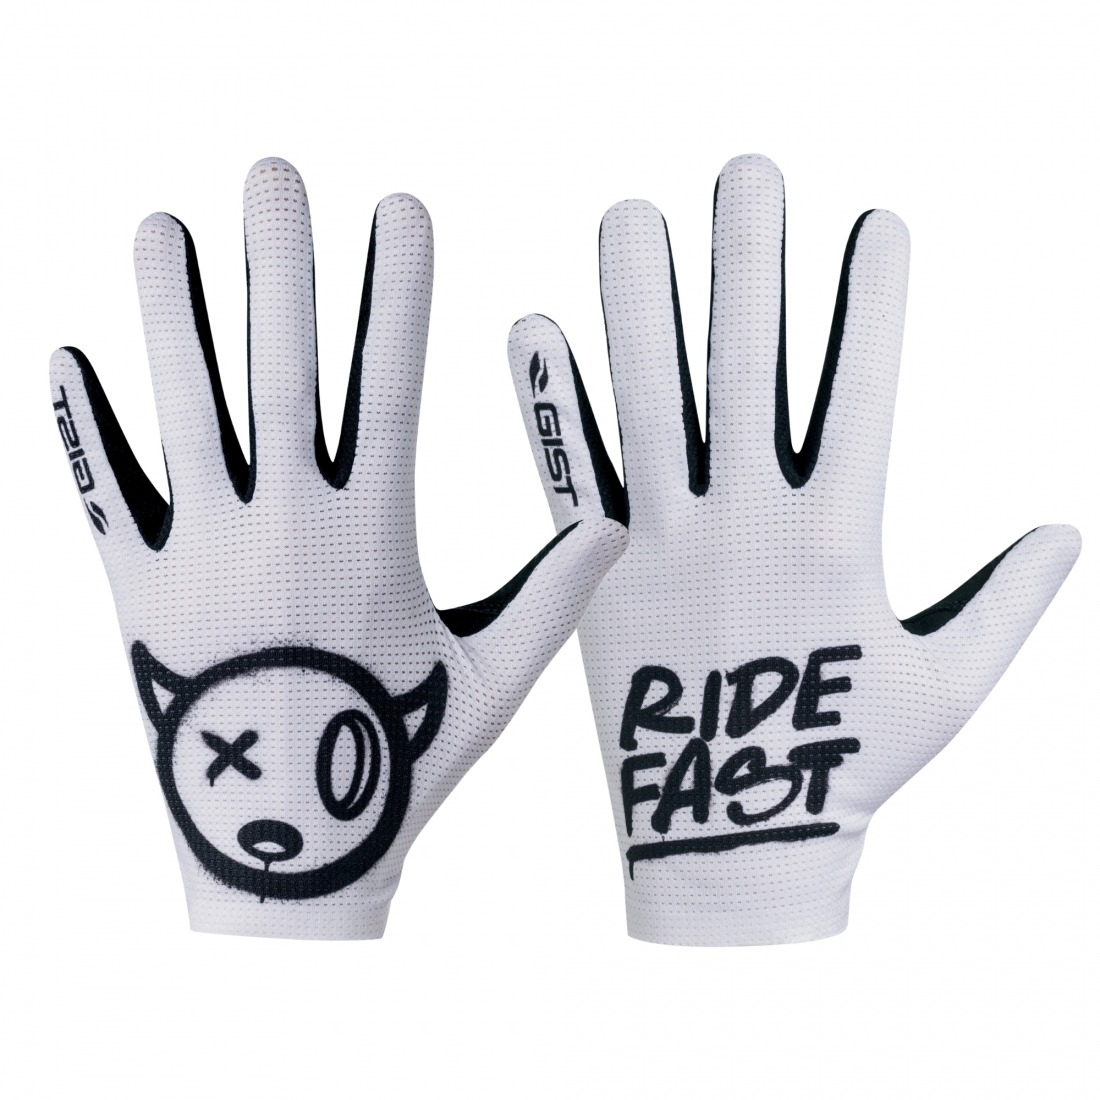 Faster Gloves White Size S